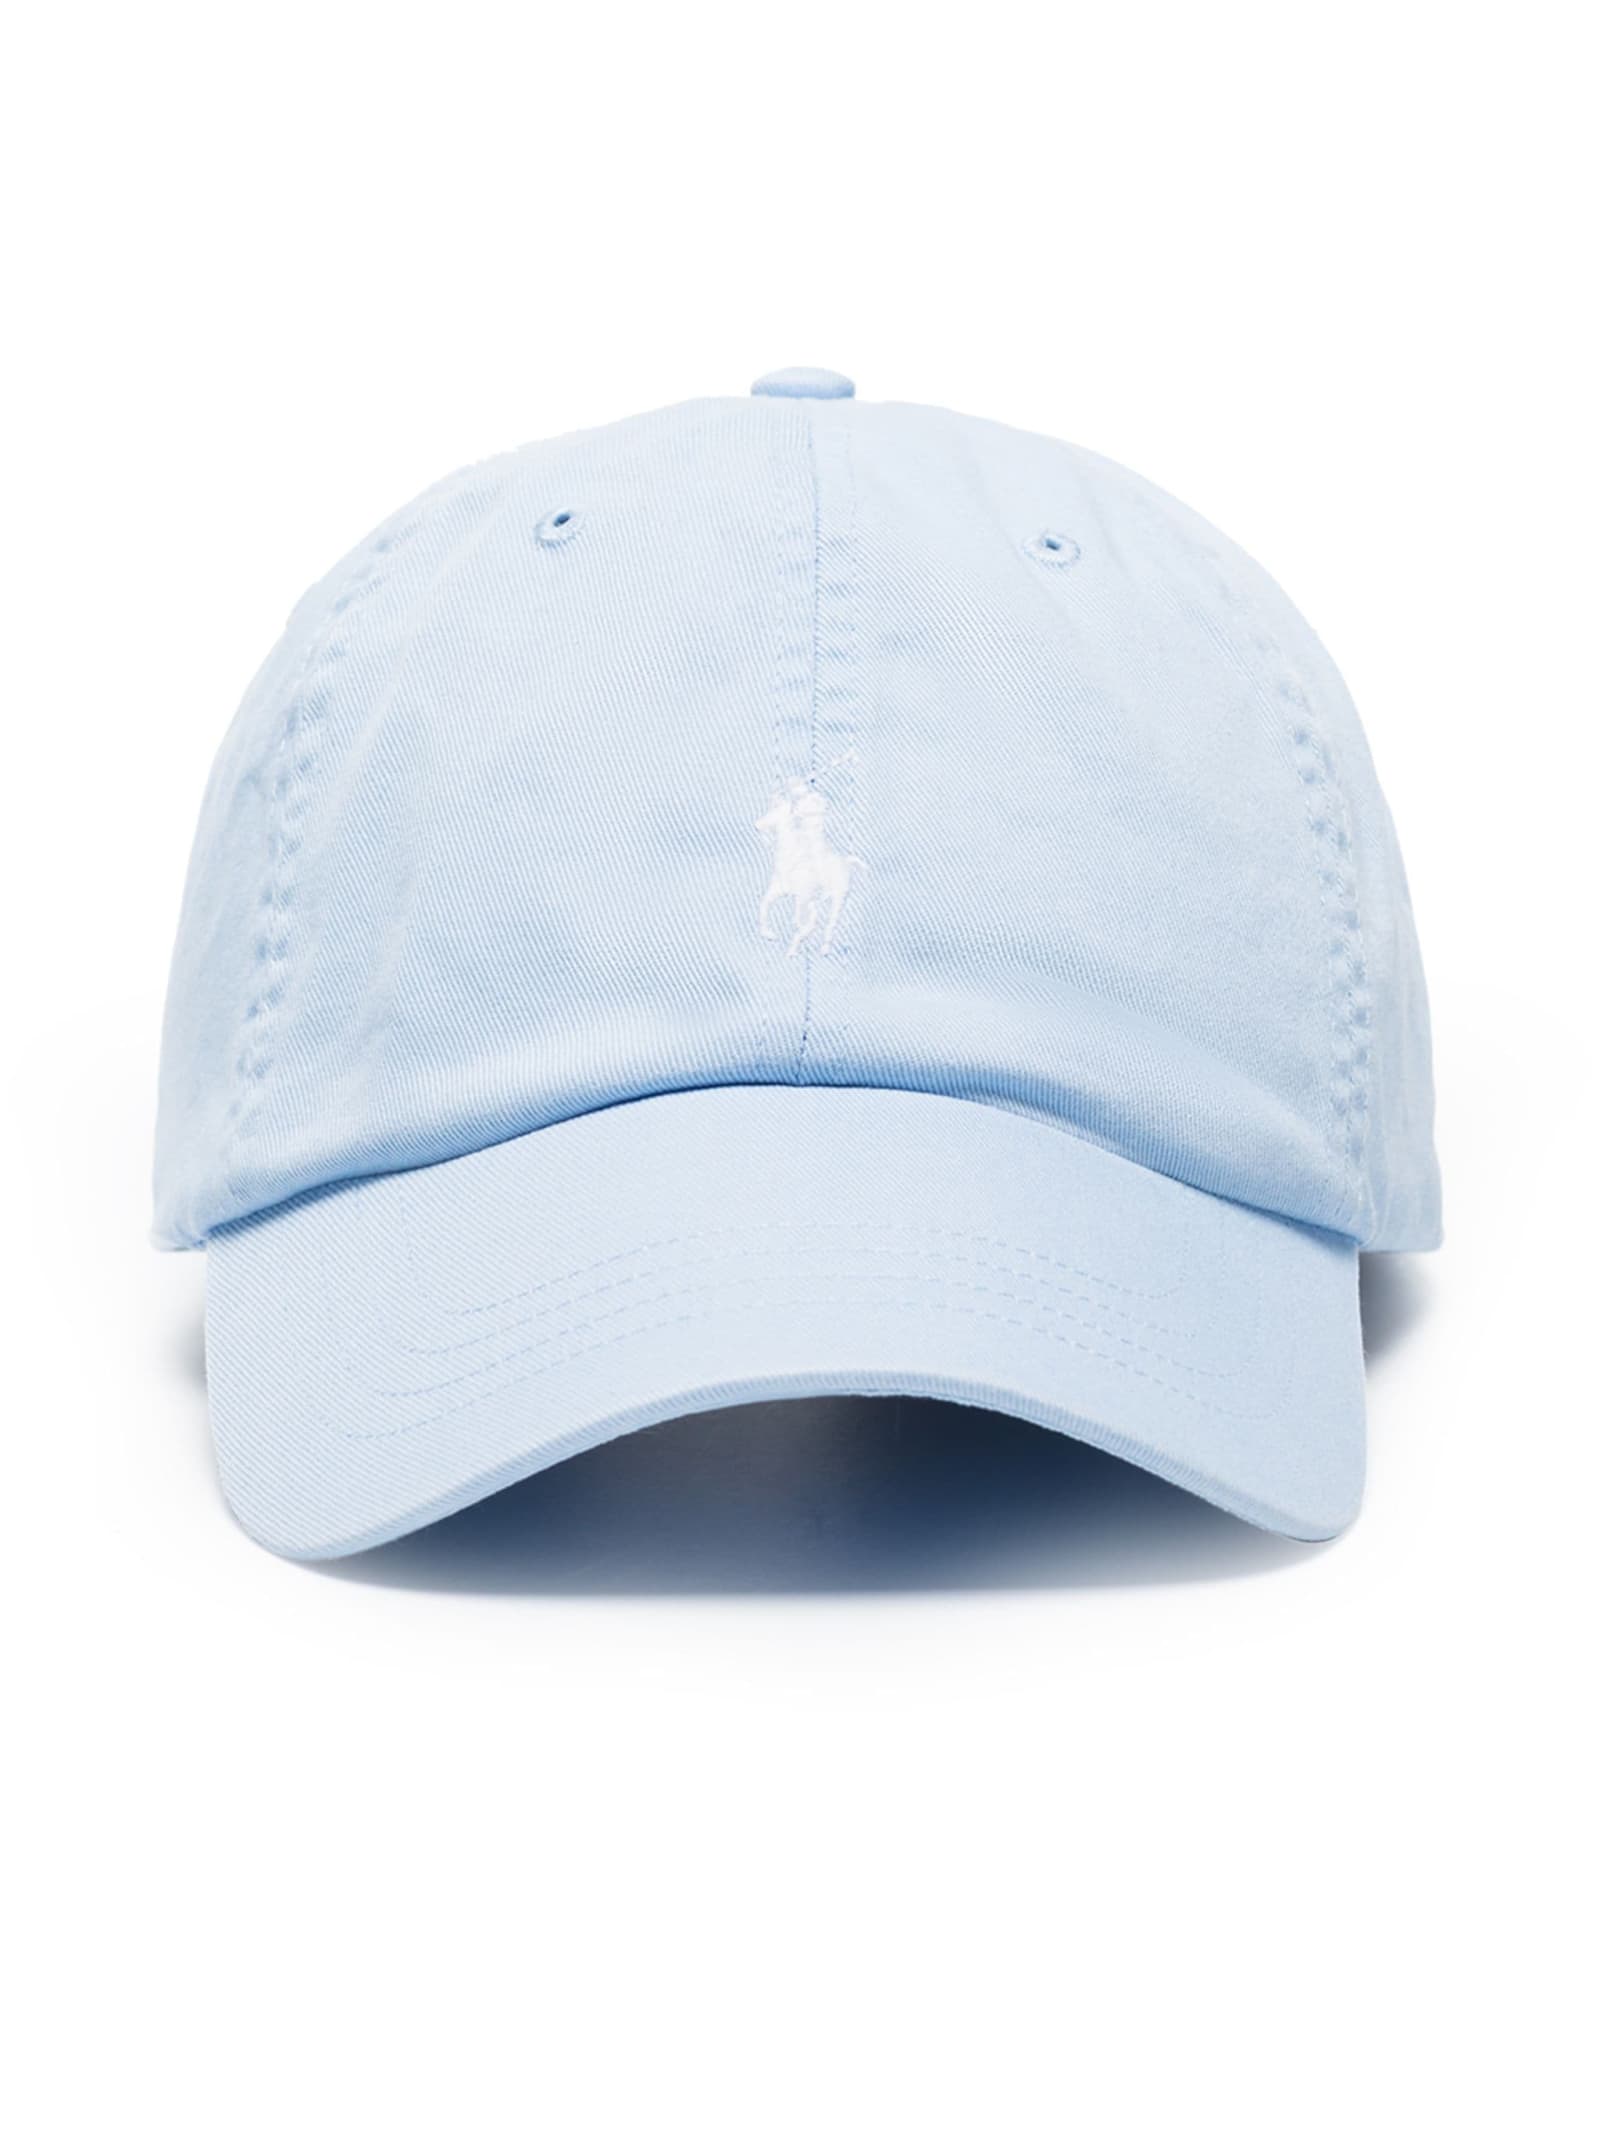 Ralph Lauren Sky Blue Baseball Hat With Contrasting Pony